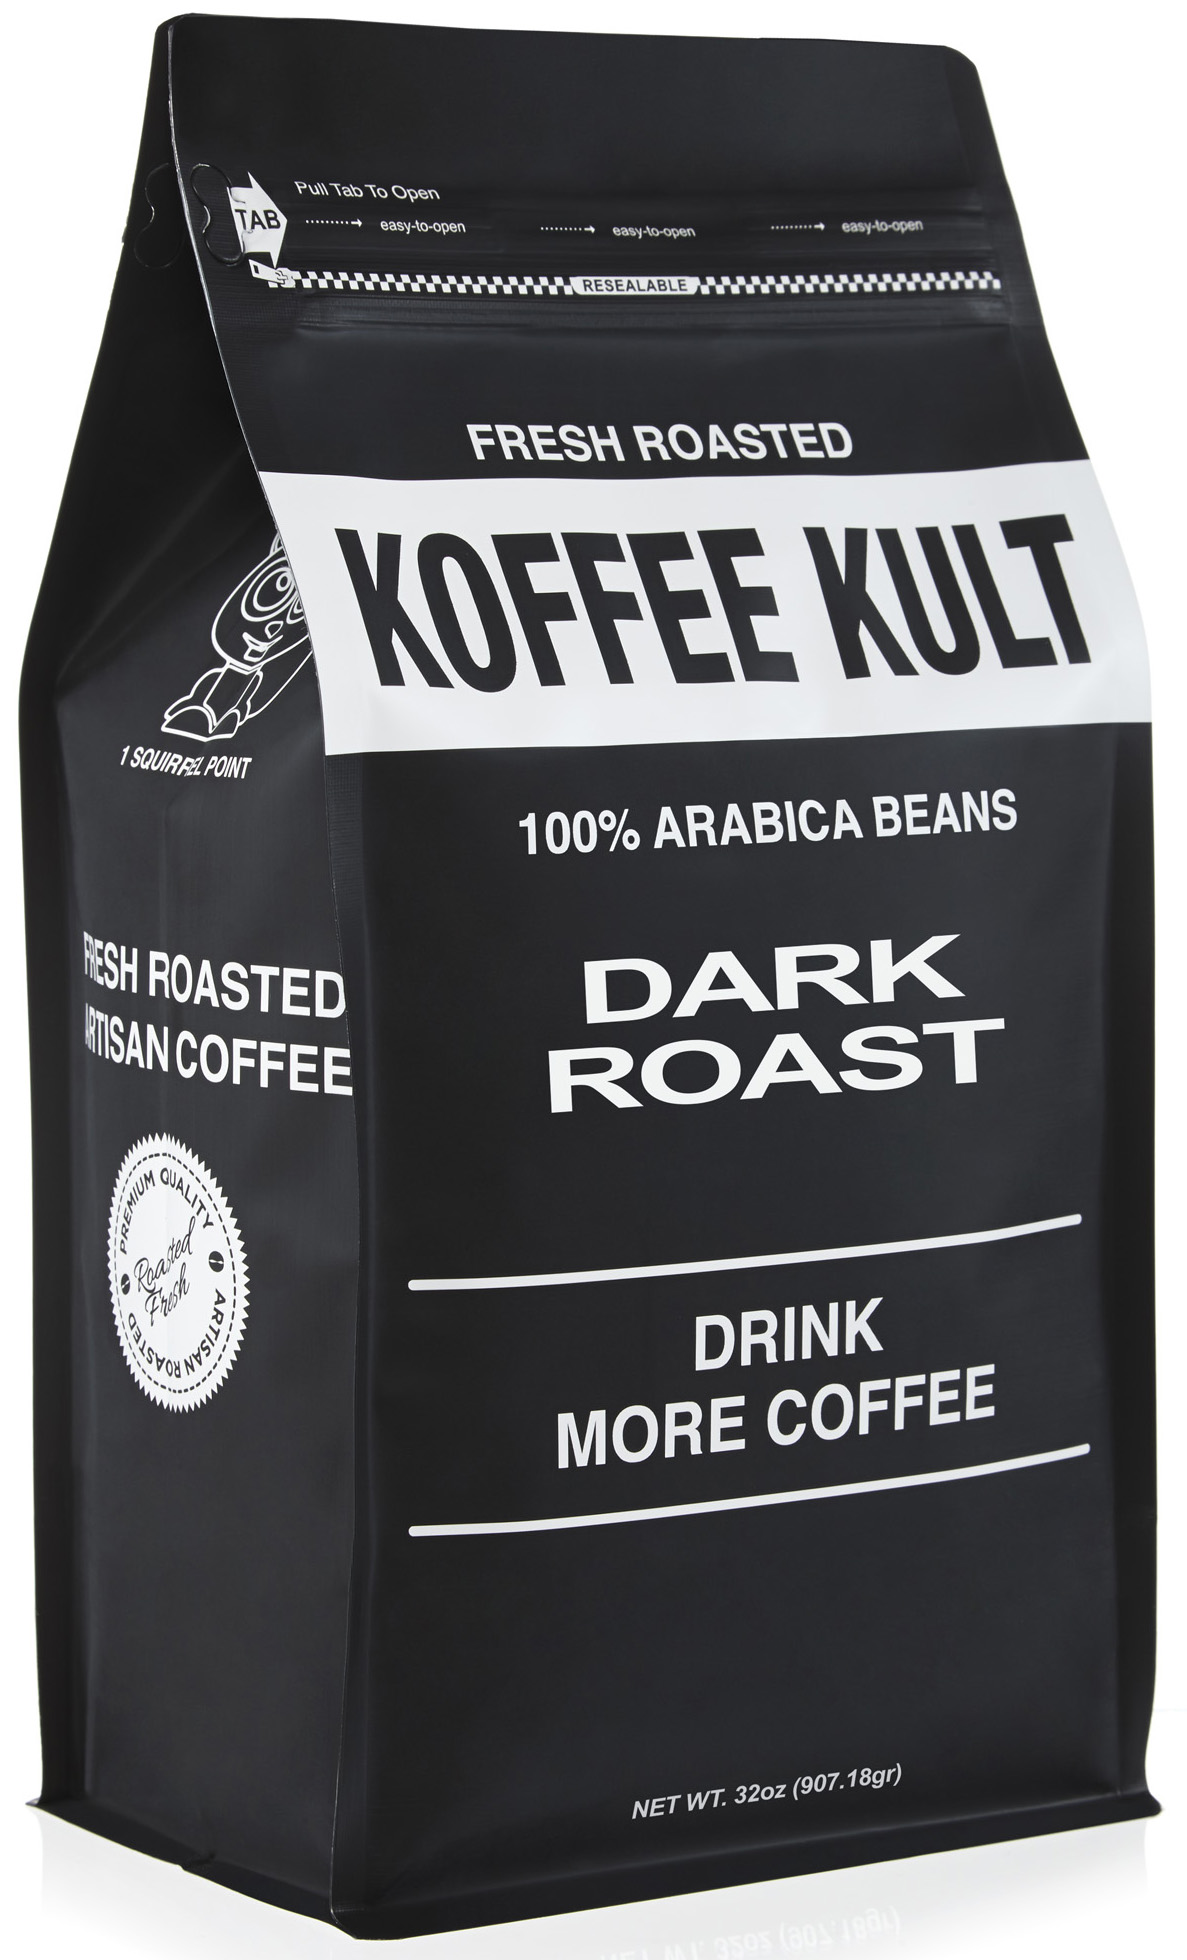 Koffee Kult Whole Bean Coffee, Dark Roast, 32 Ounce - image 1 of 4